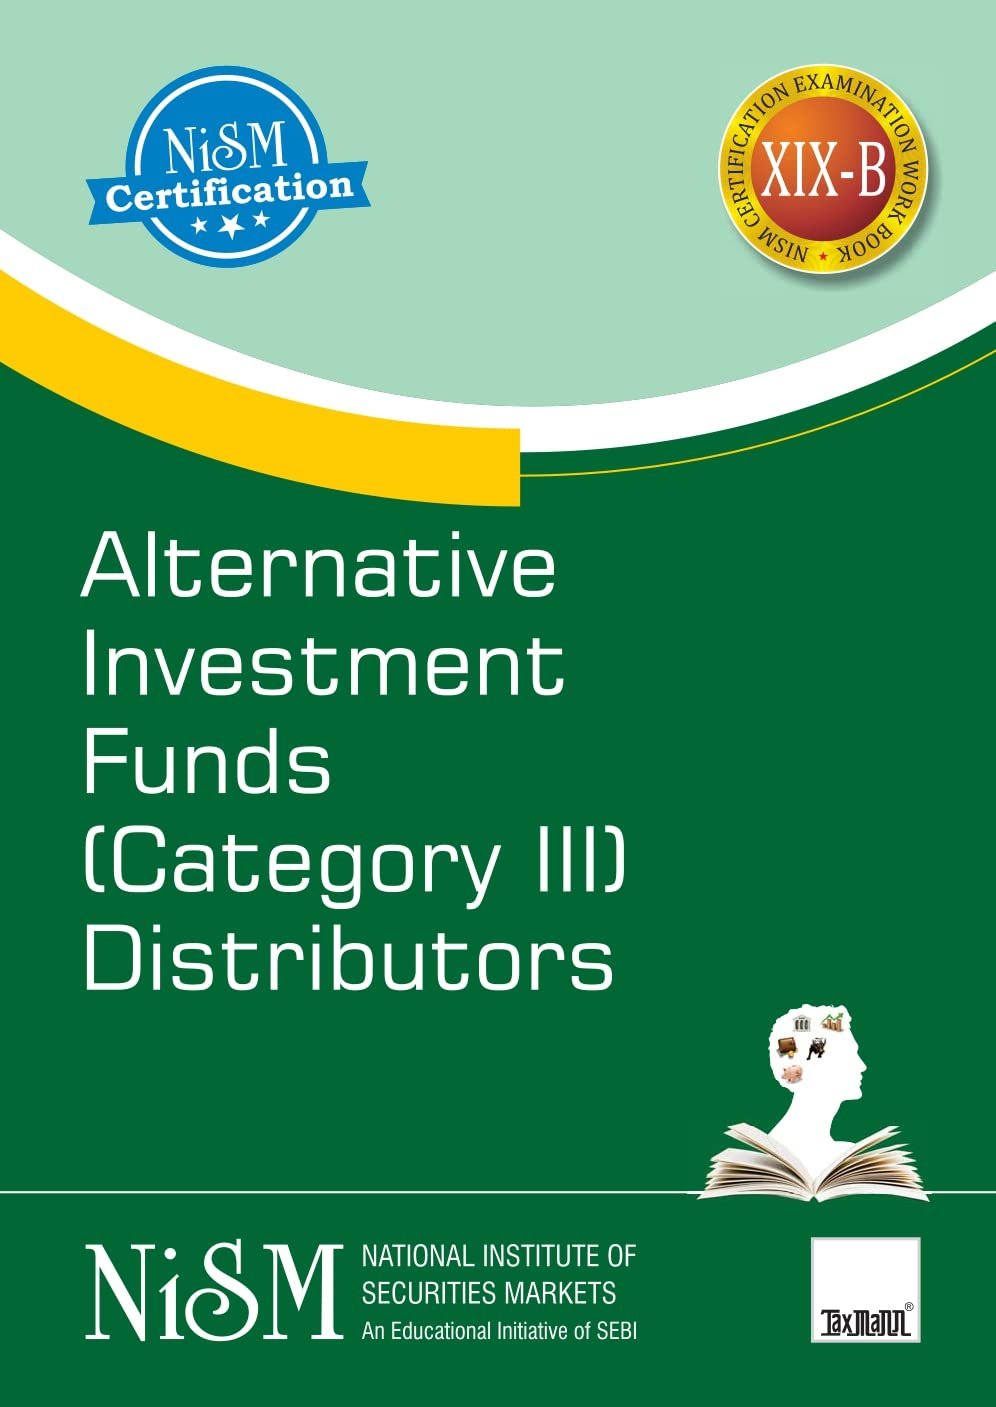 NISM Series XIX-B: Alternative Investment Funds (Category III) Distributors workbook